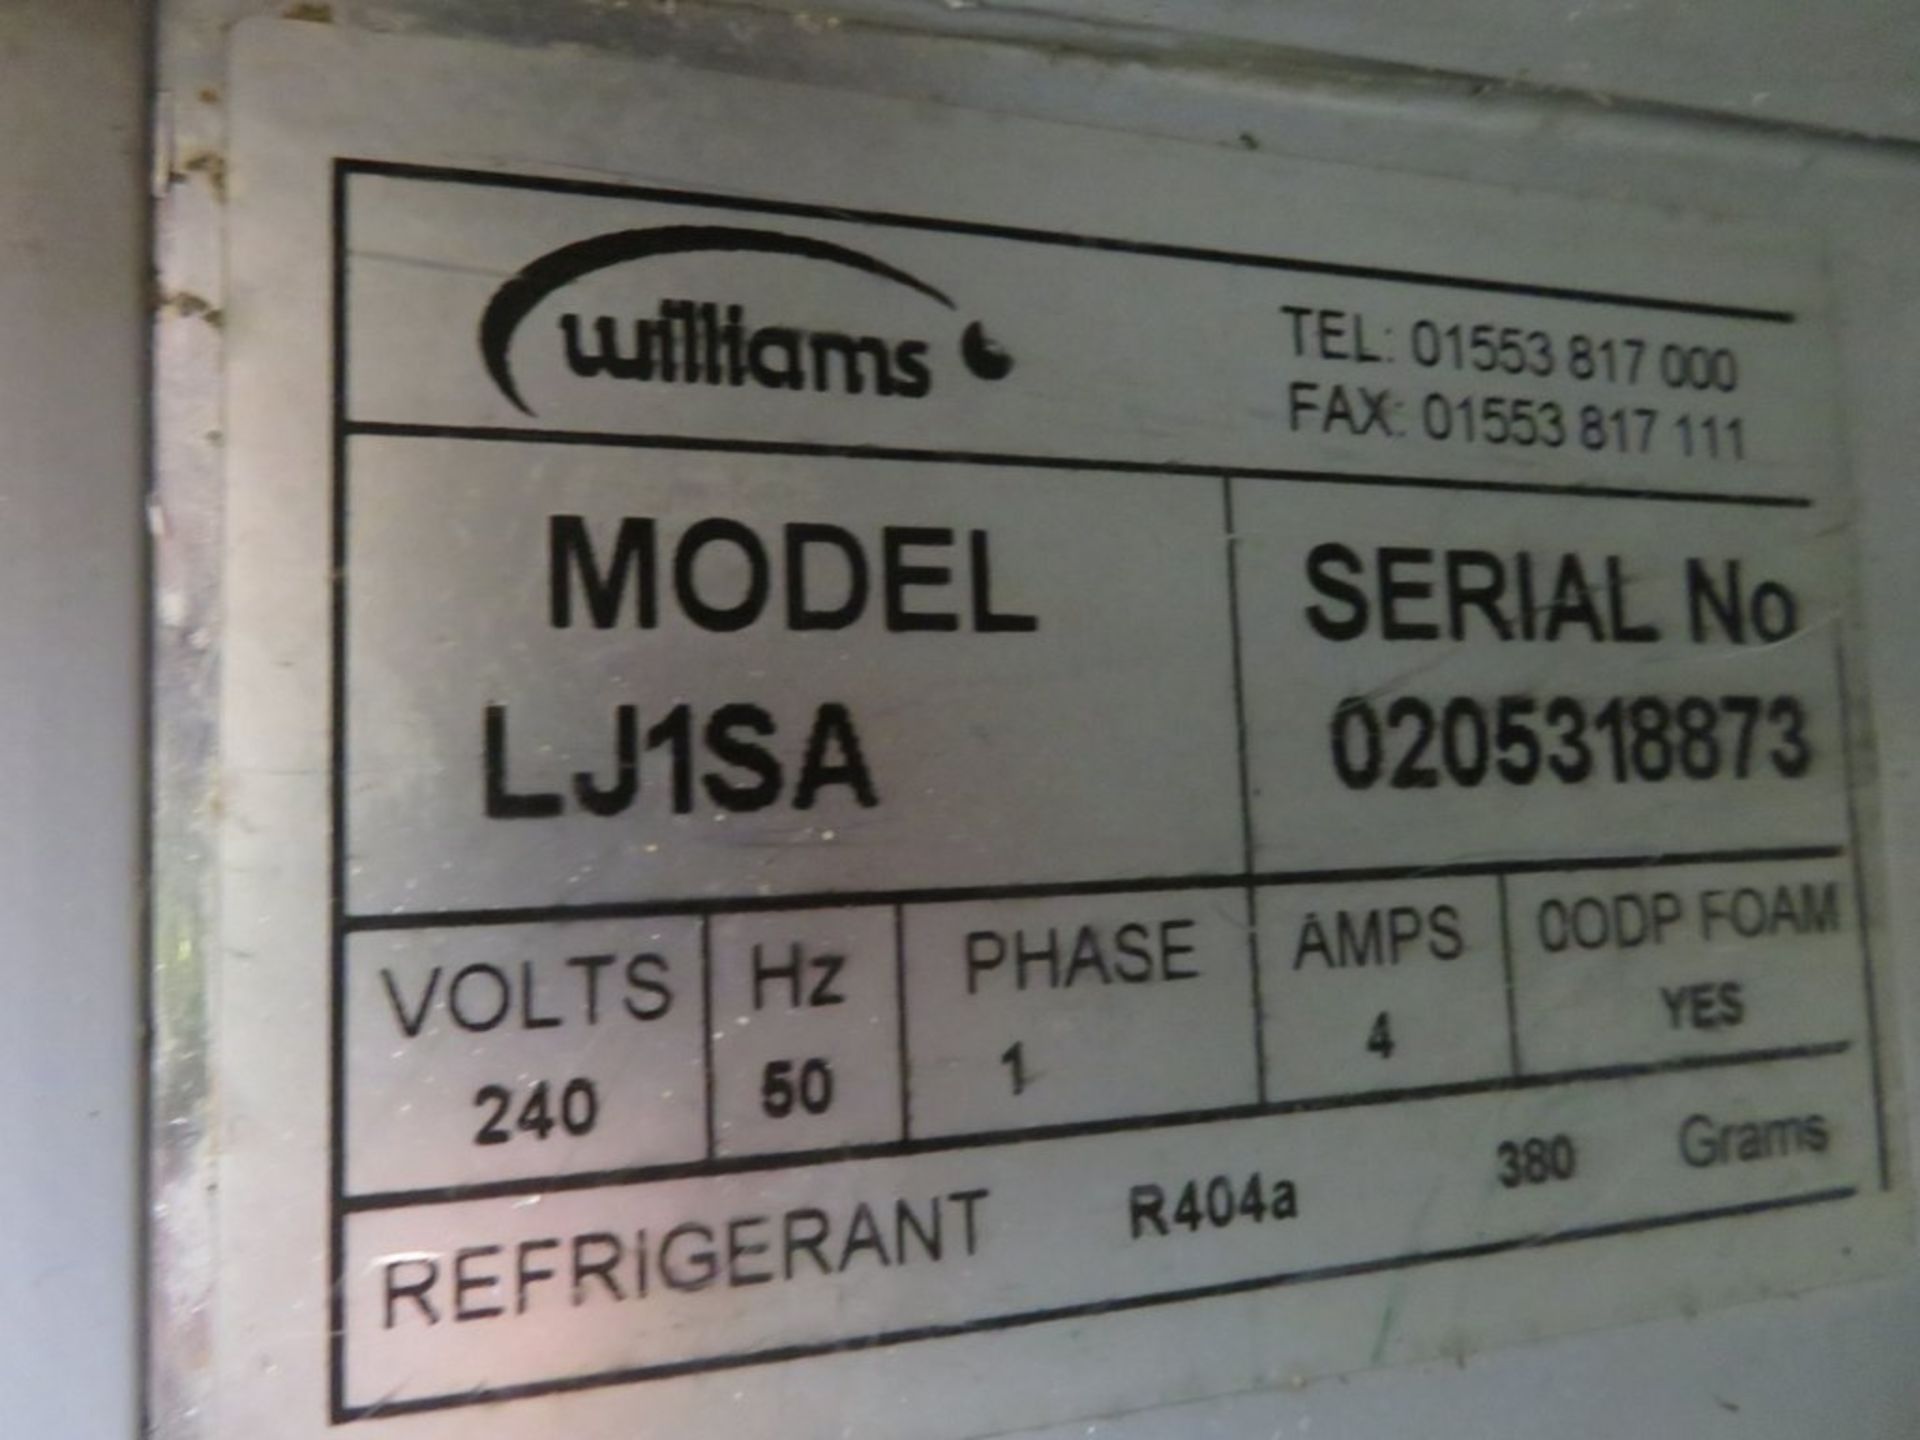 Williams LJ1SA single door freezer - Image 9 of 9